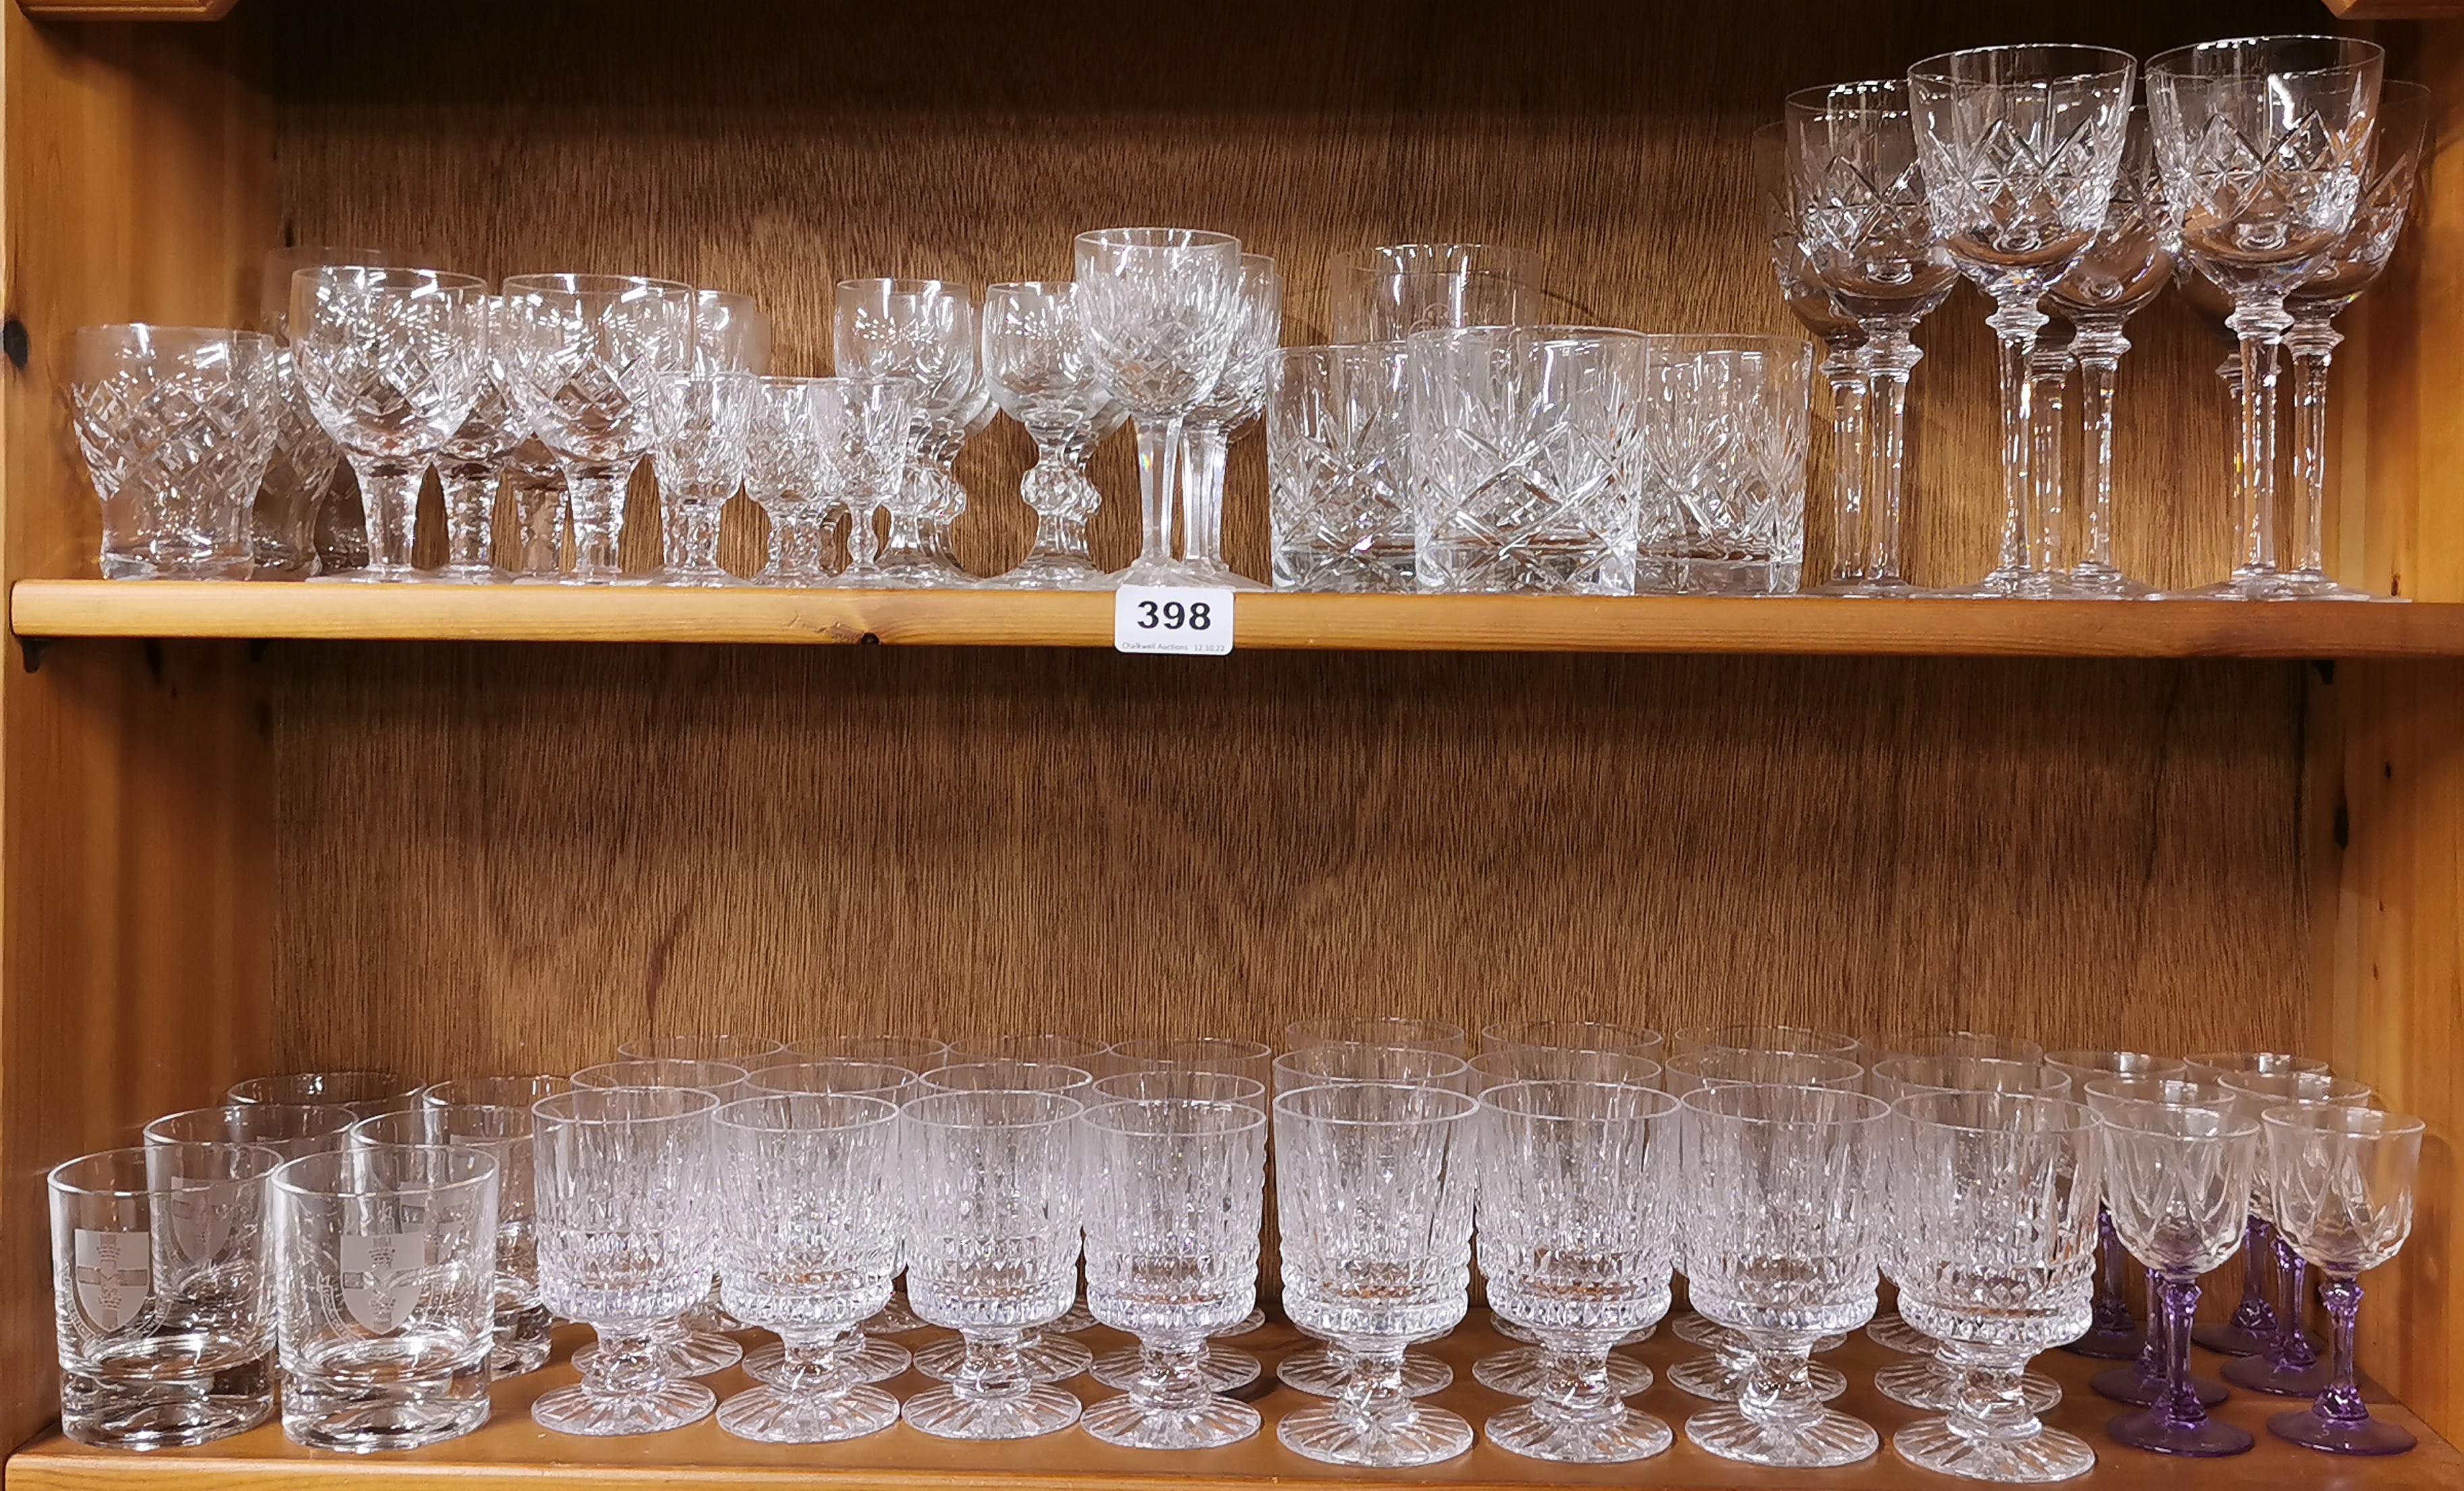 A quantity of good glassware including Royal Doulton.